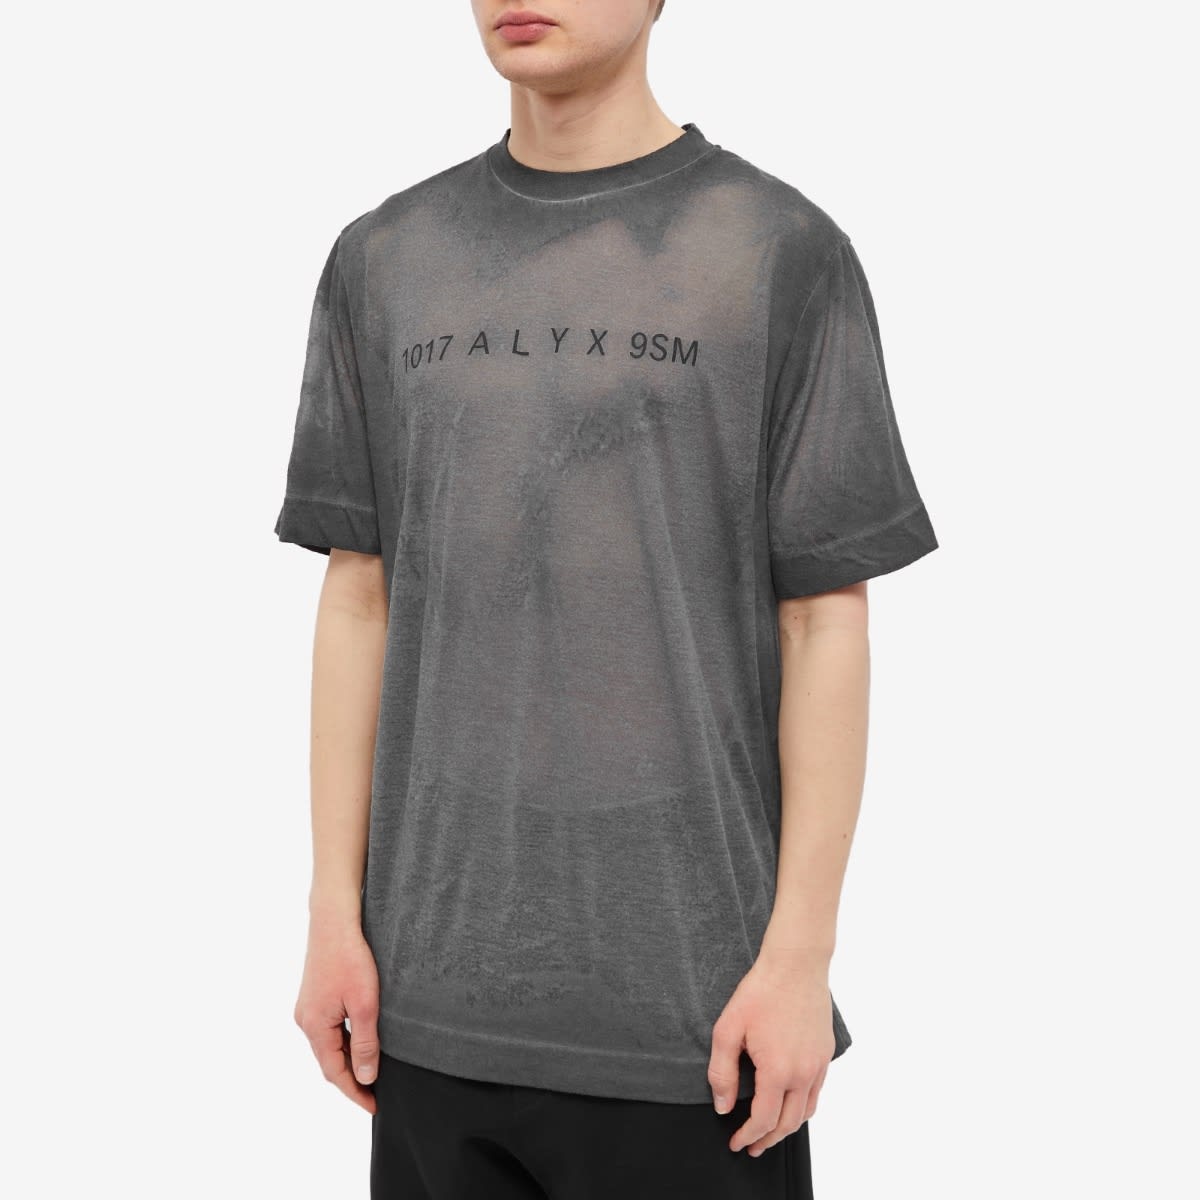 1017 ALYX 9SM Transluscent Graphic T-Shirt - 2